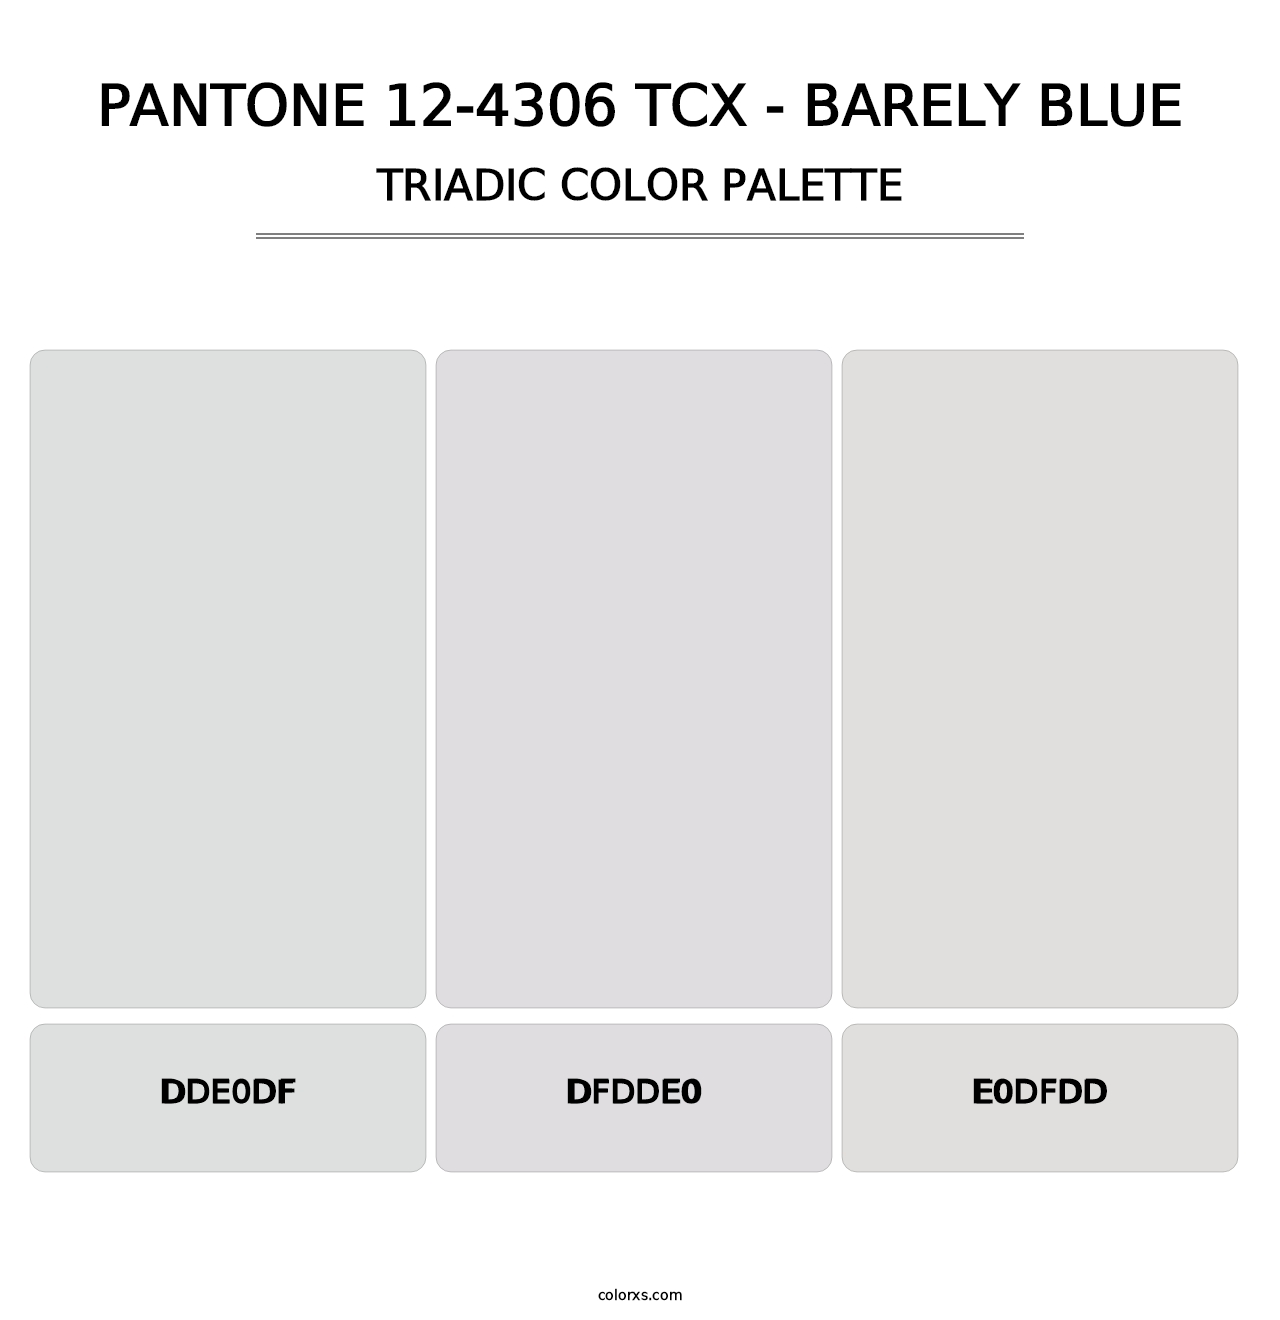 PANTONE 12-4306 TCX - Barely Blue - Triadic Color Palette